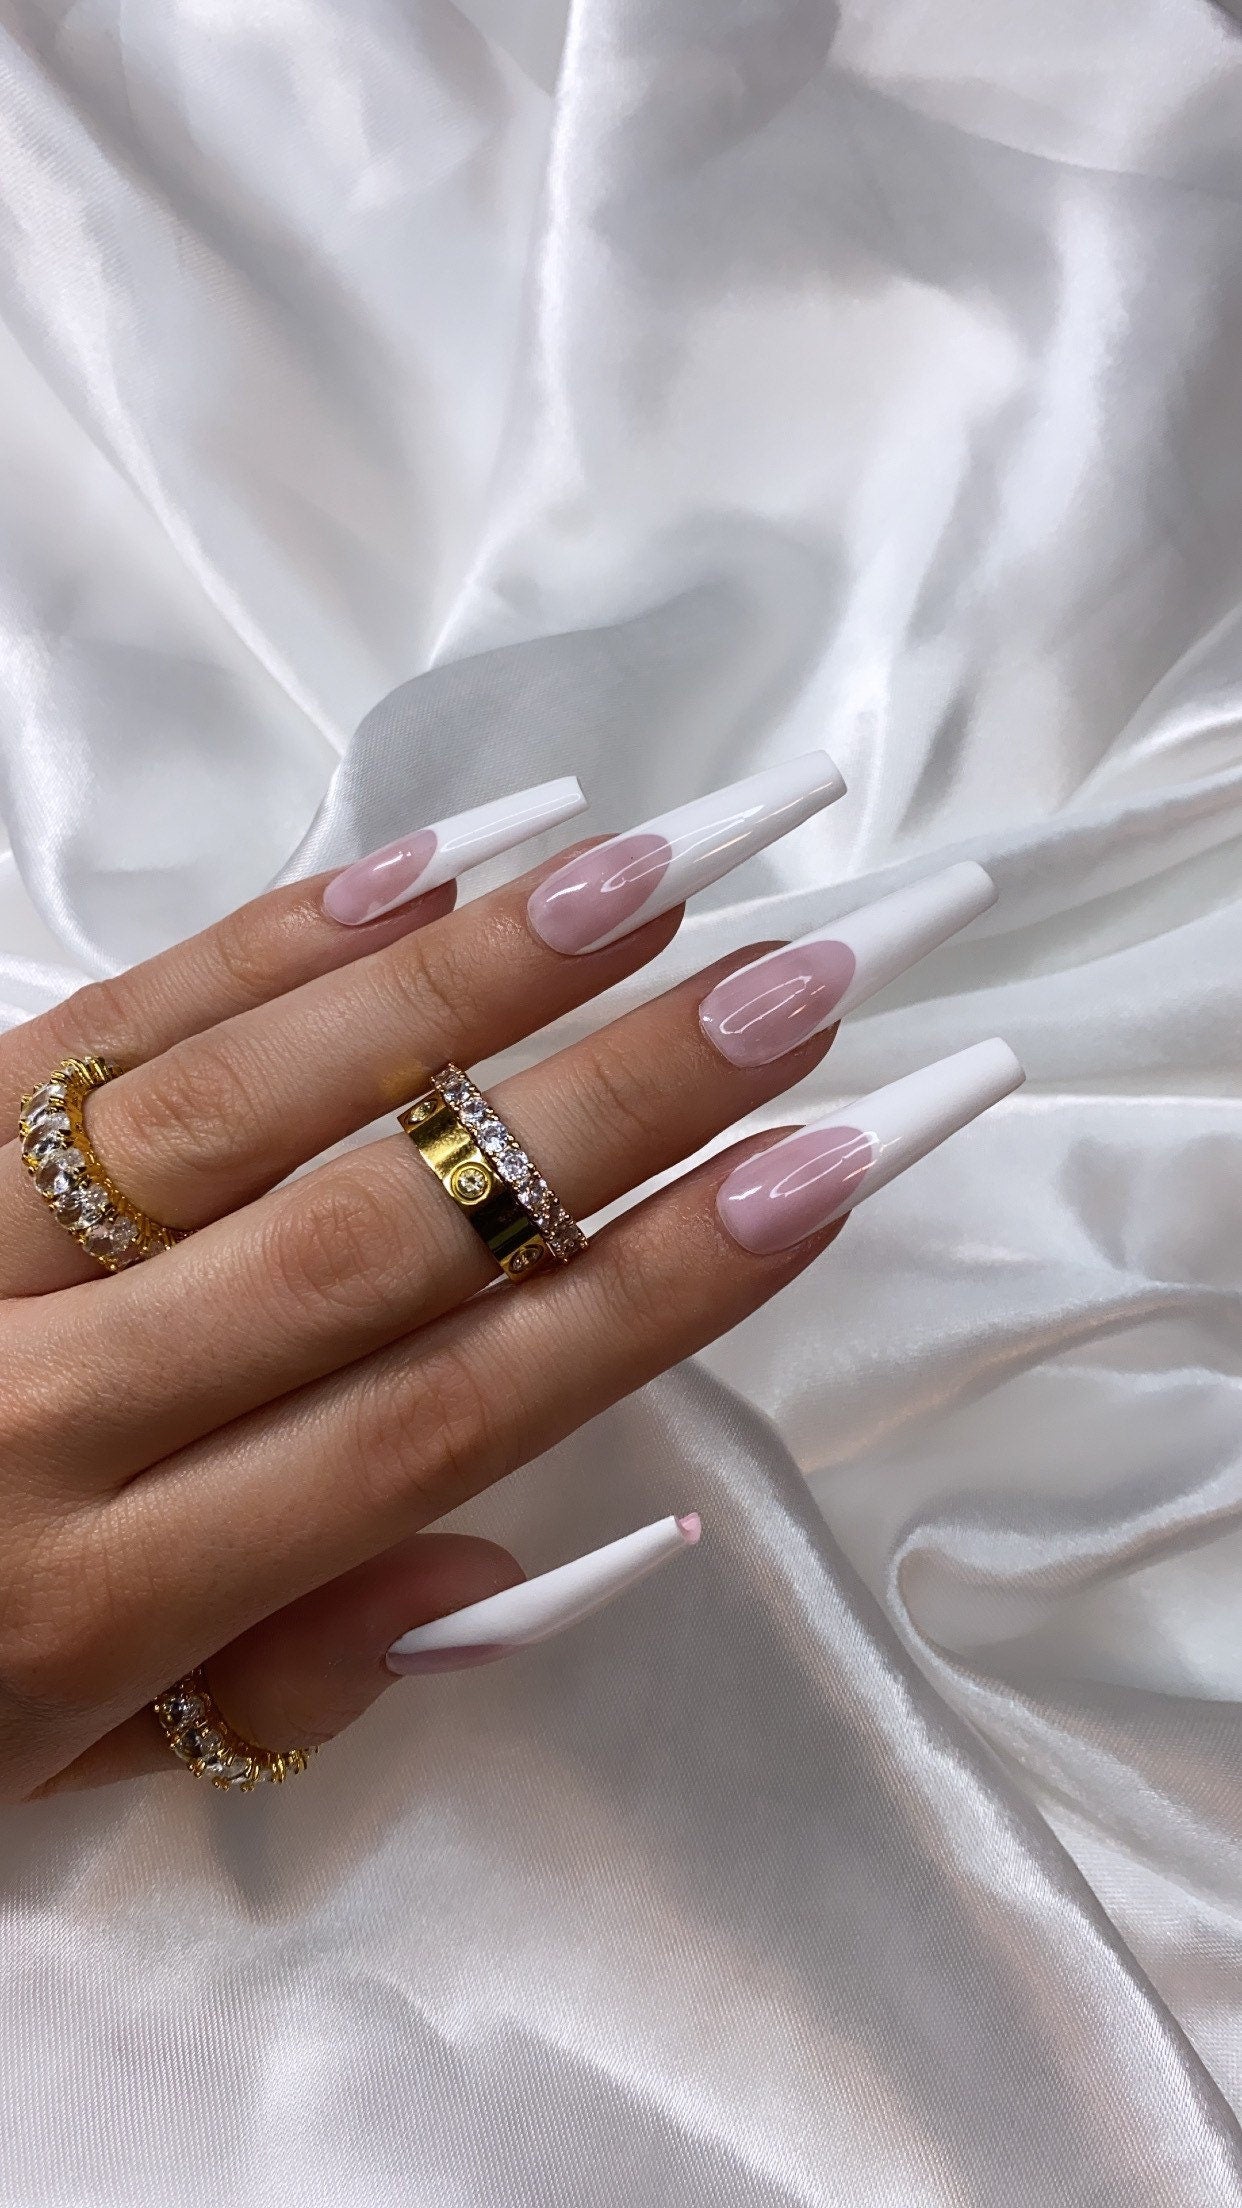 white french acrylic nails tumblr